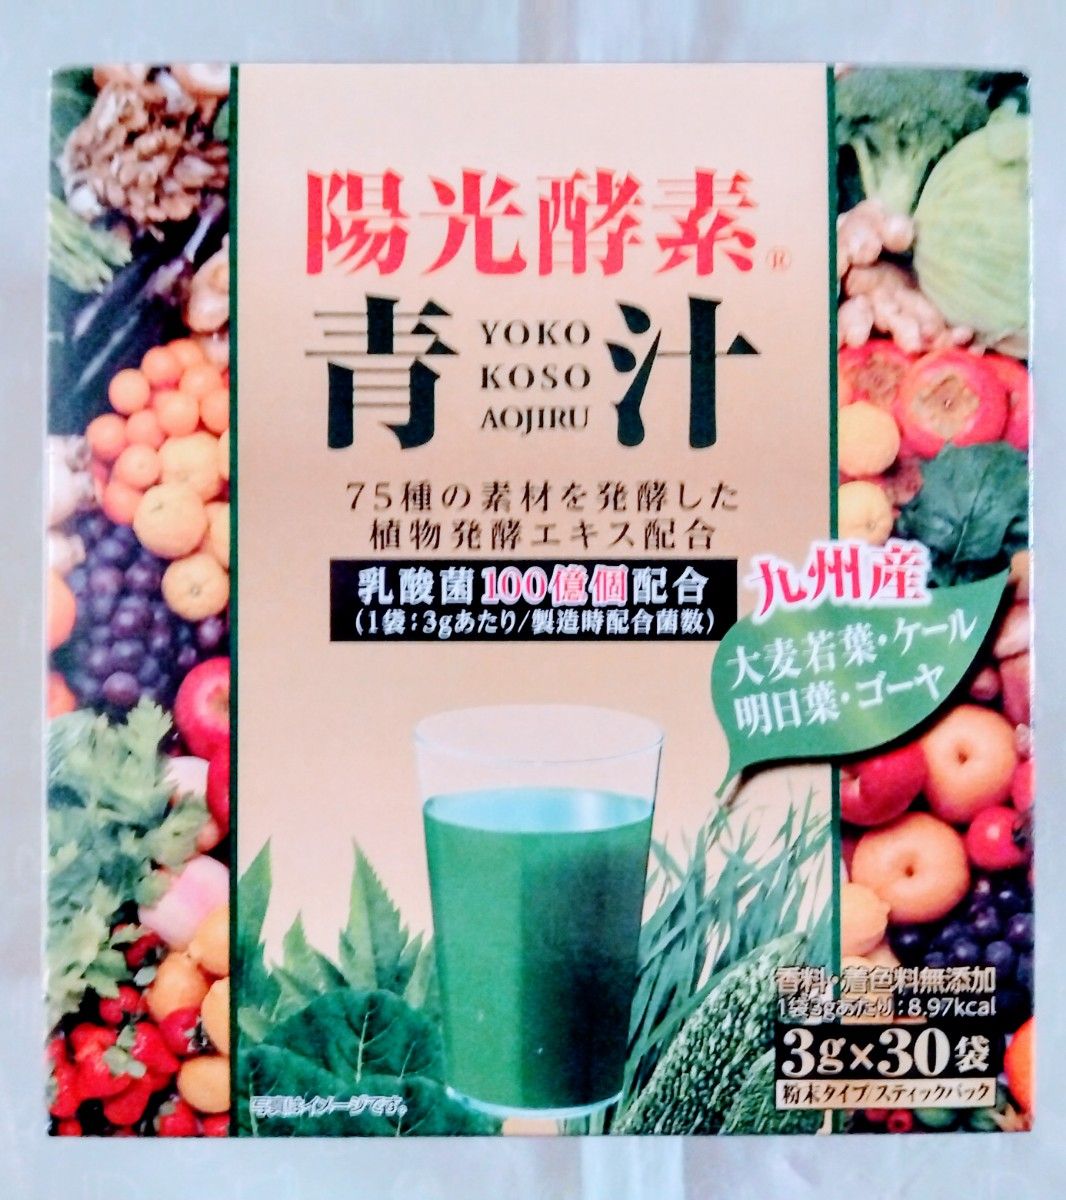 ■陽光酵素 青汁(植物発酵エキス+乳酸菌100億個配合)3g×30袋。